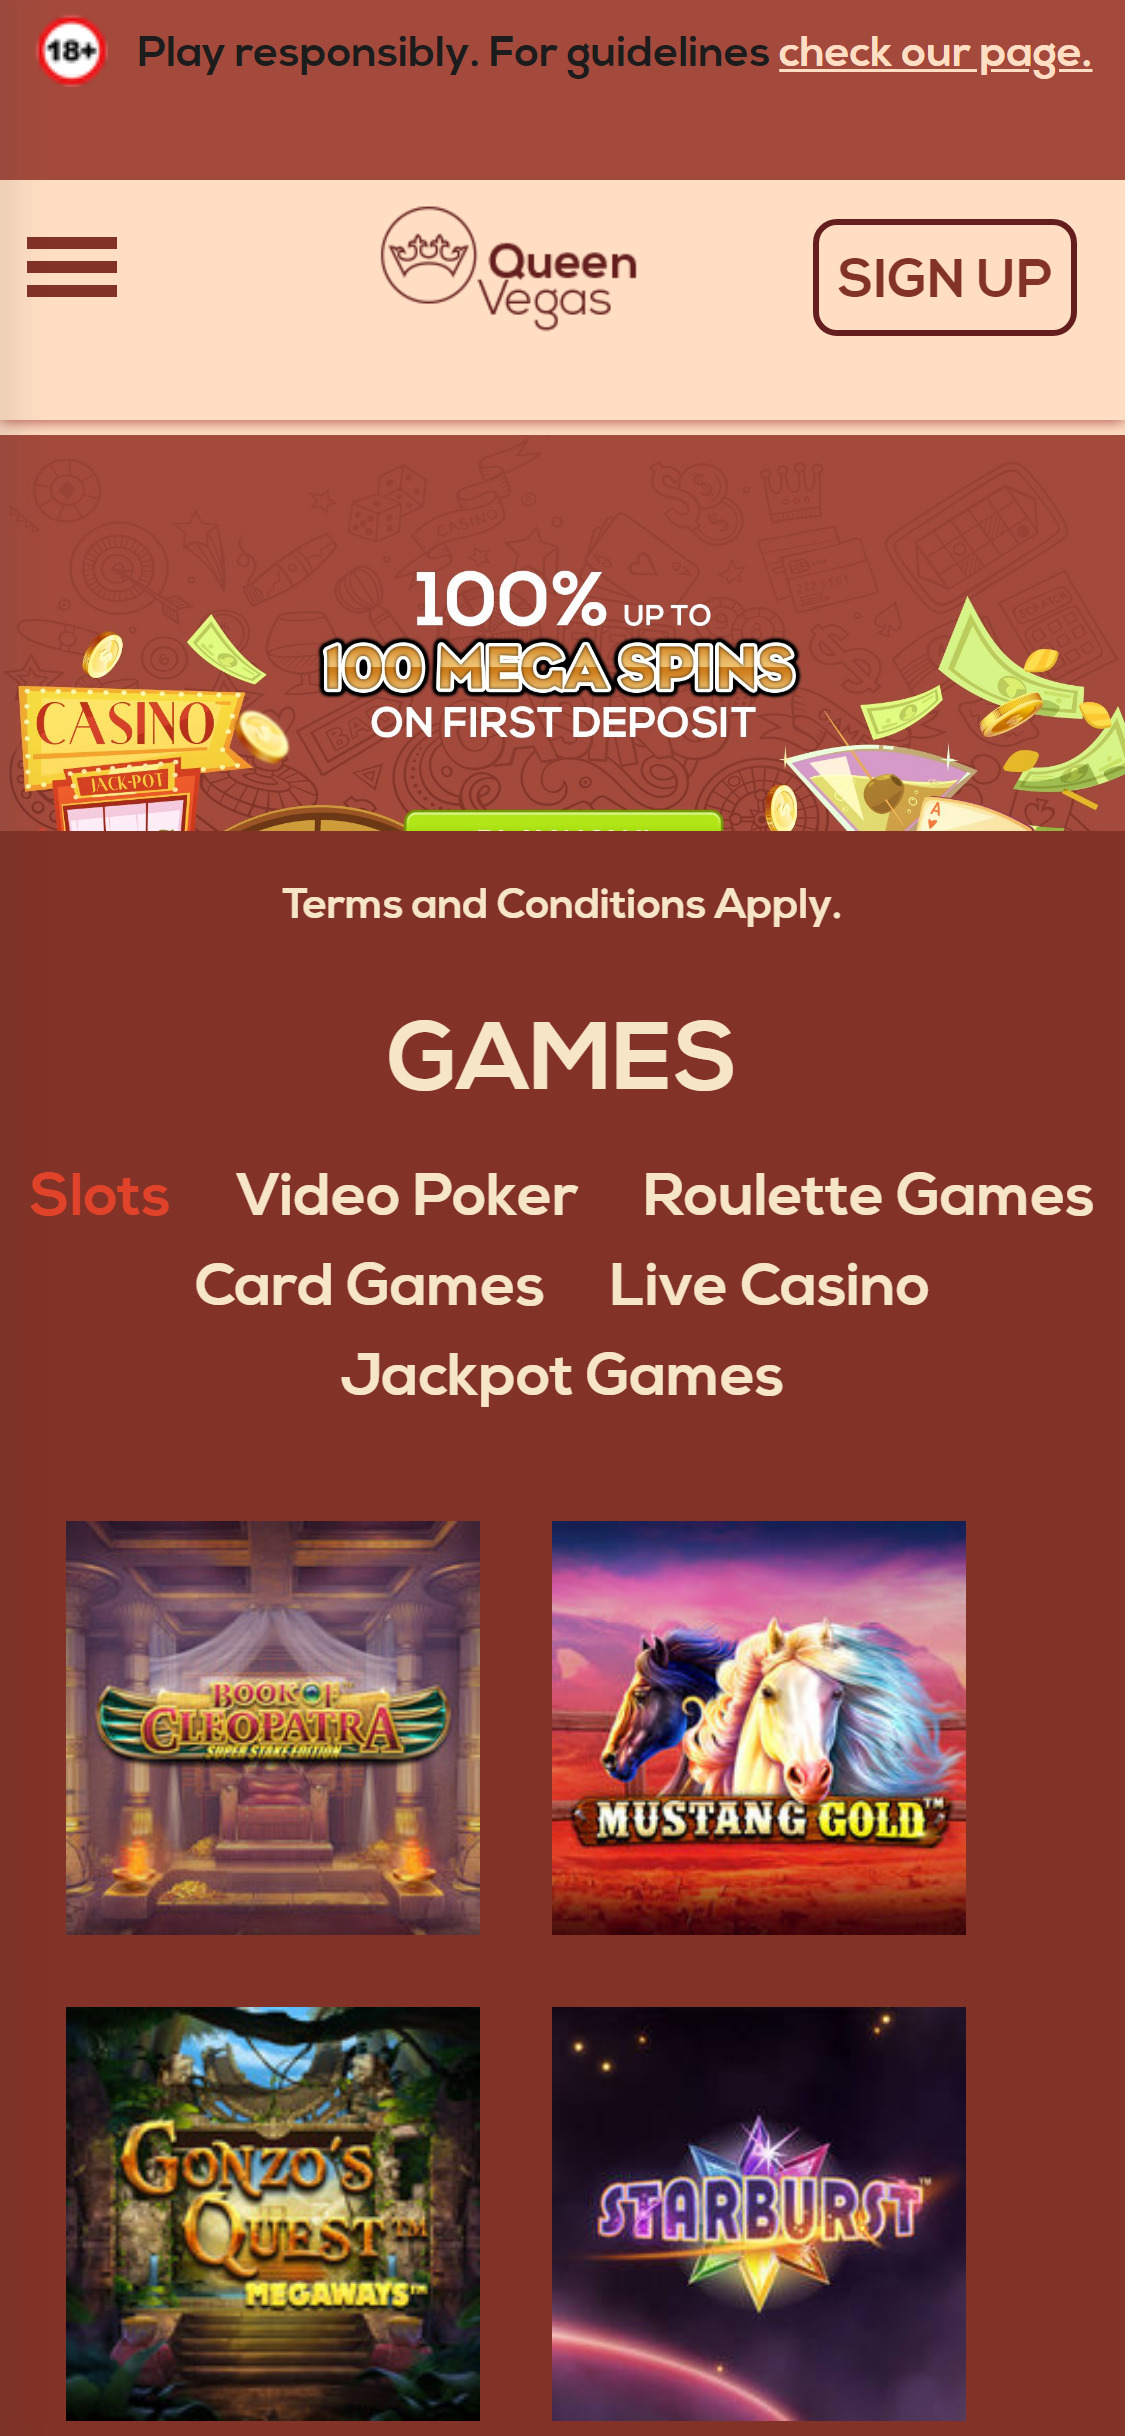 Queen Vegas Casino Mobile Review